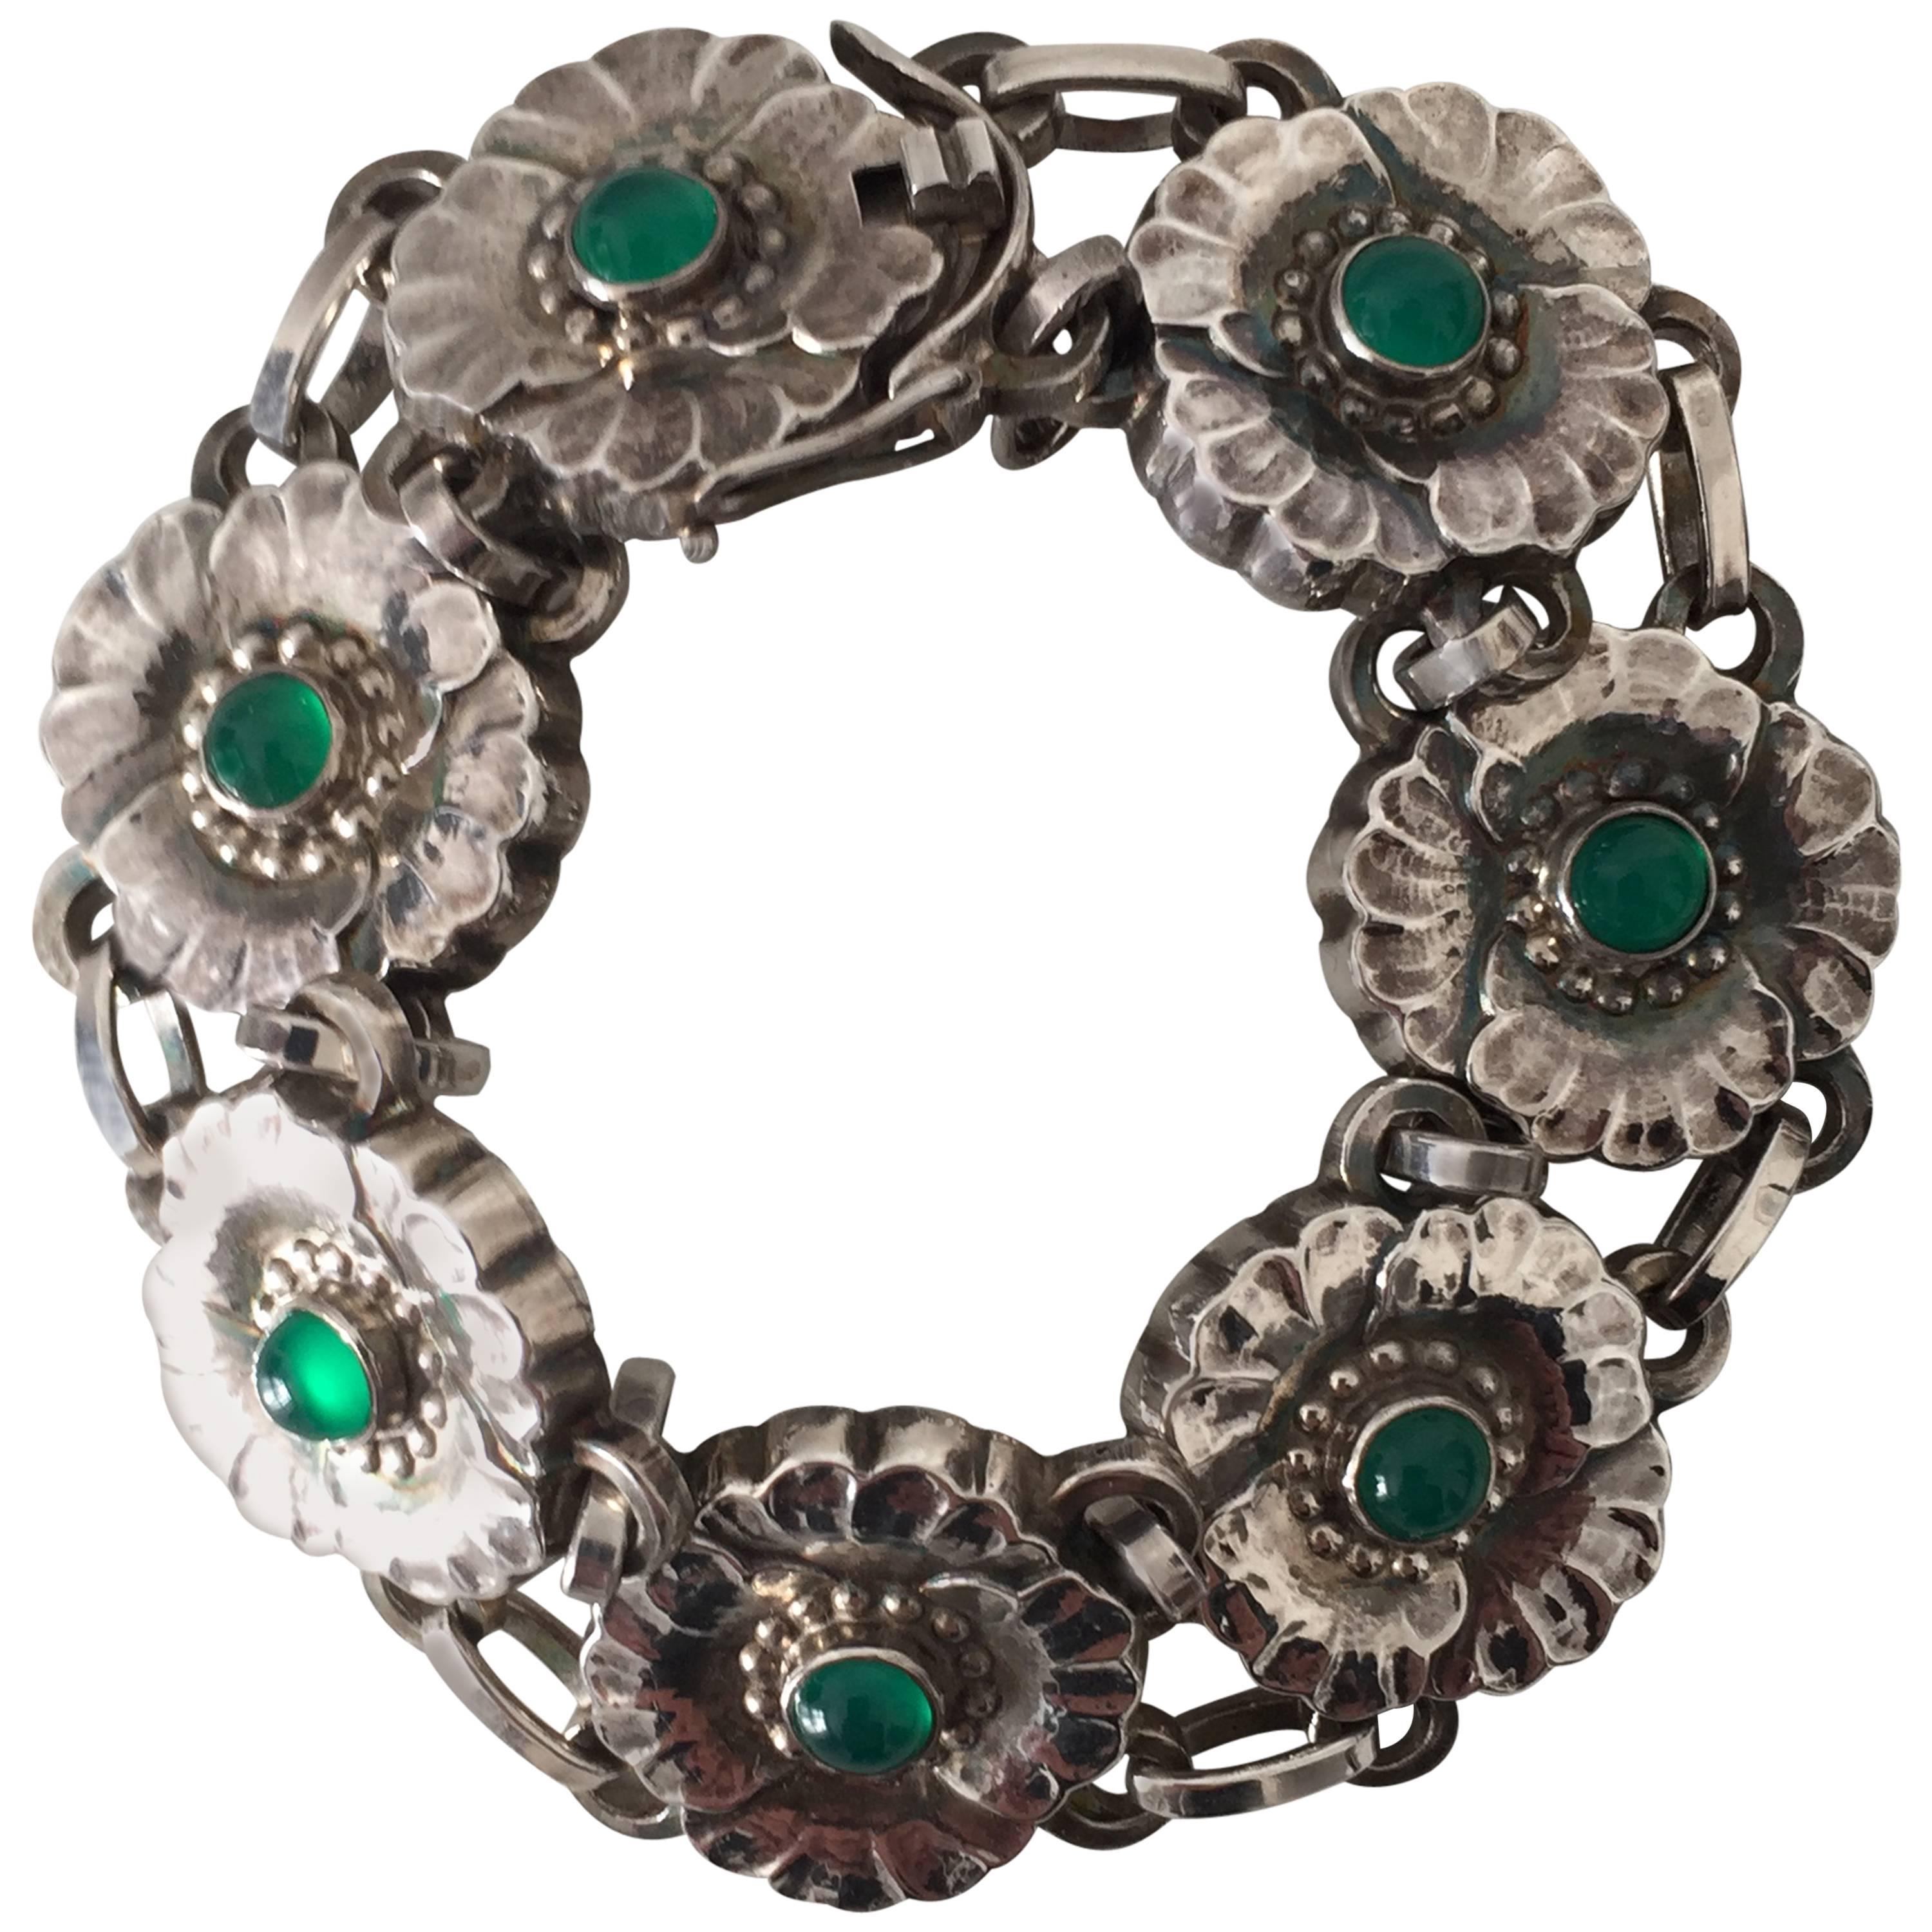 Georg Jensen Sterling Silver Bracelet with Green Stones